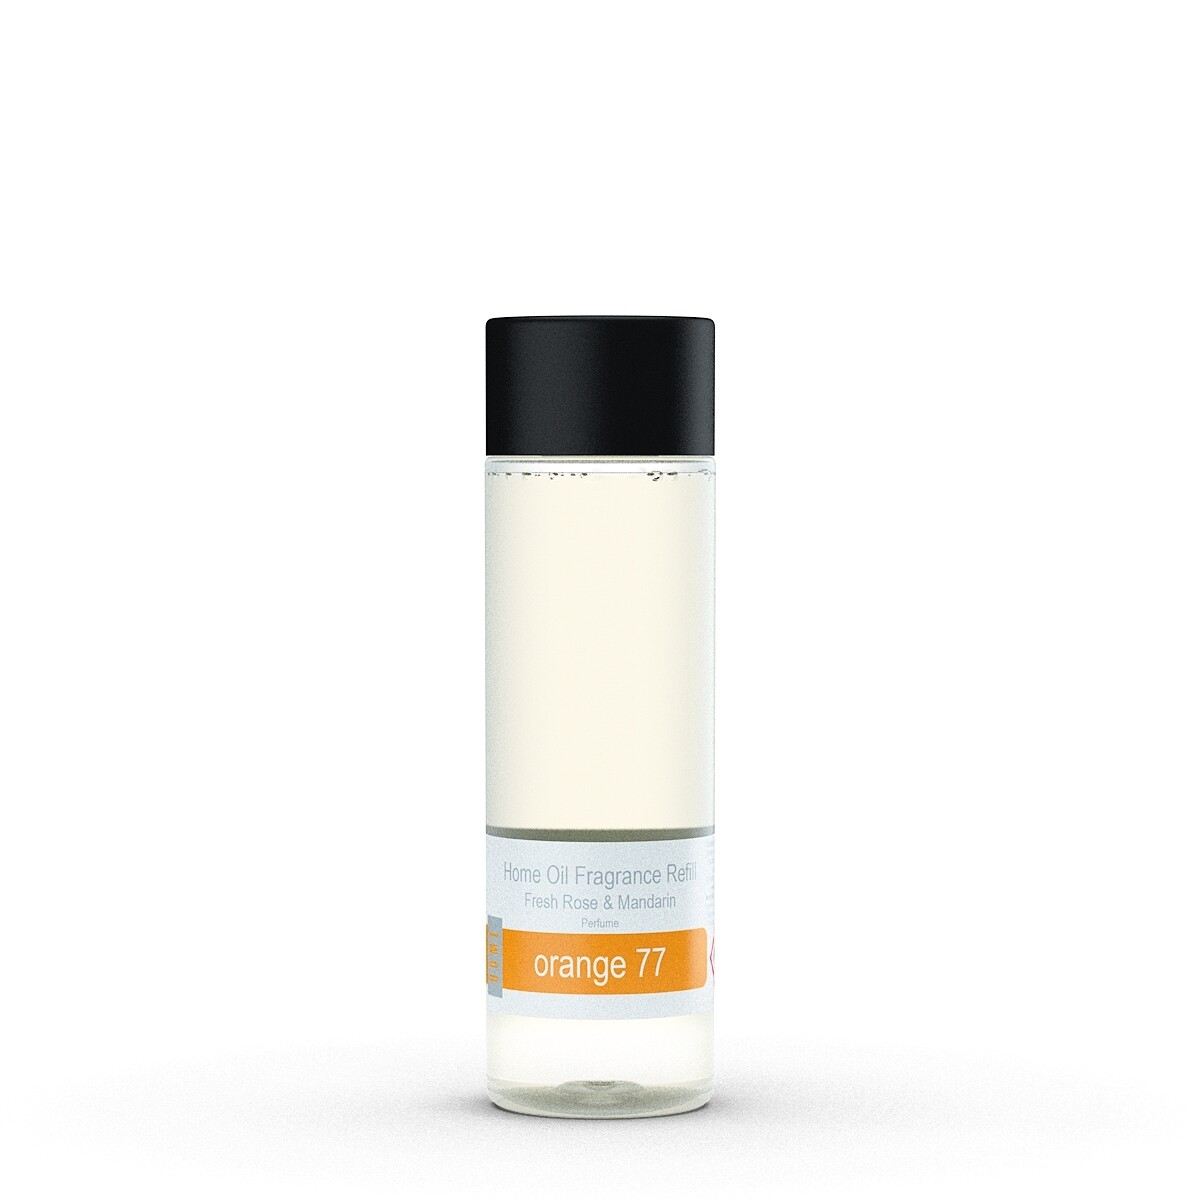 Fragrance REFILL ORANGE77 | Janzen Home & Body